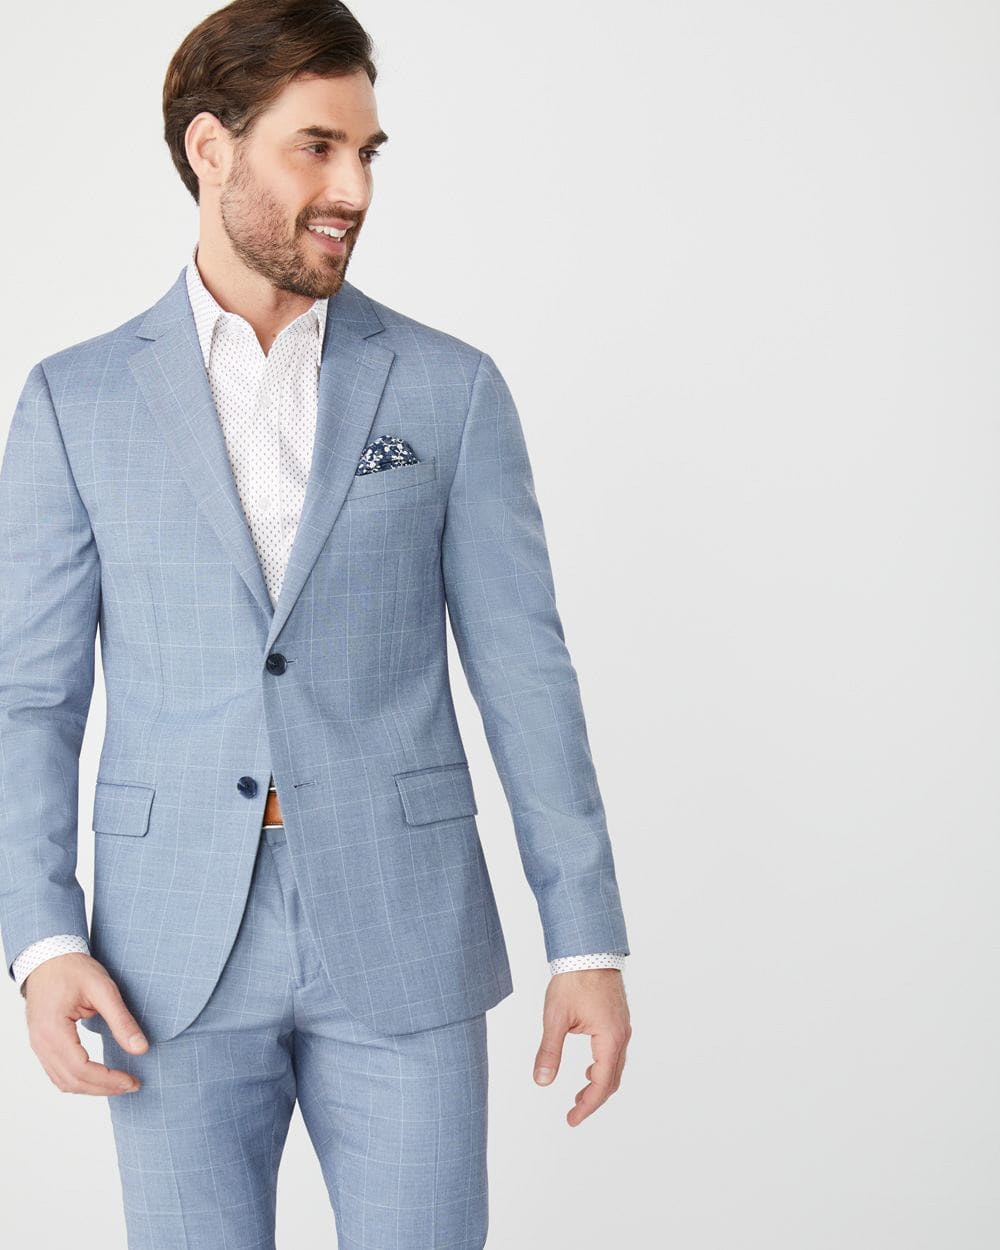 Slim fit light blue windowpane suit blazer | RW&CO.